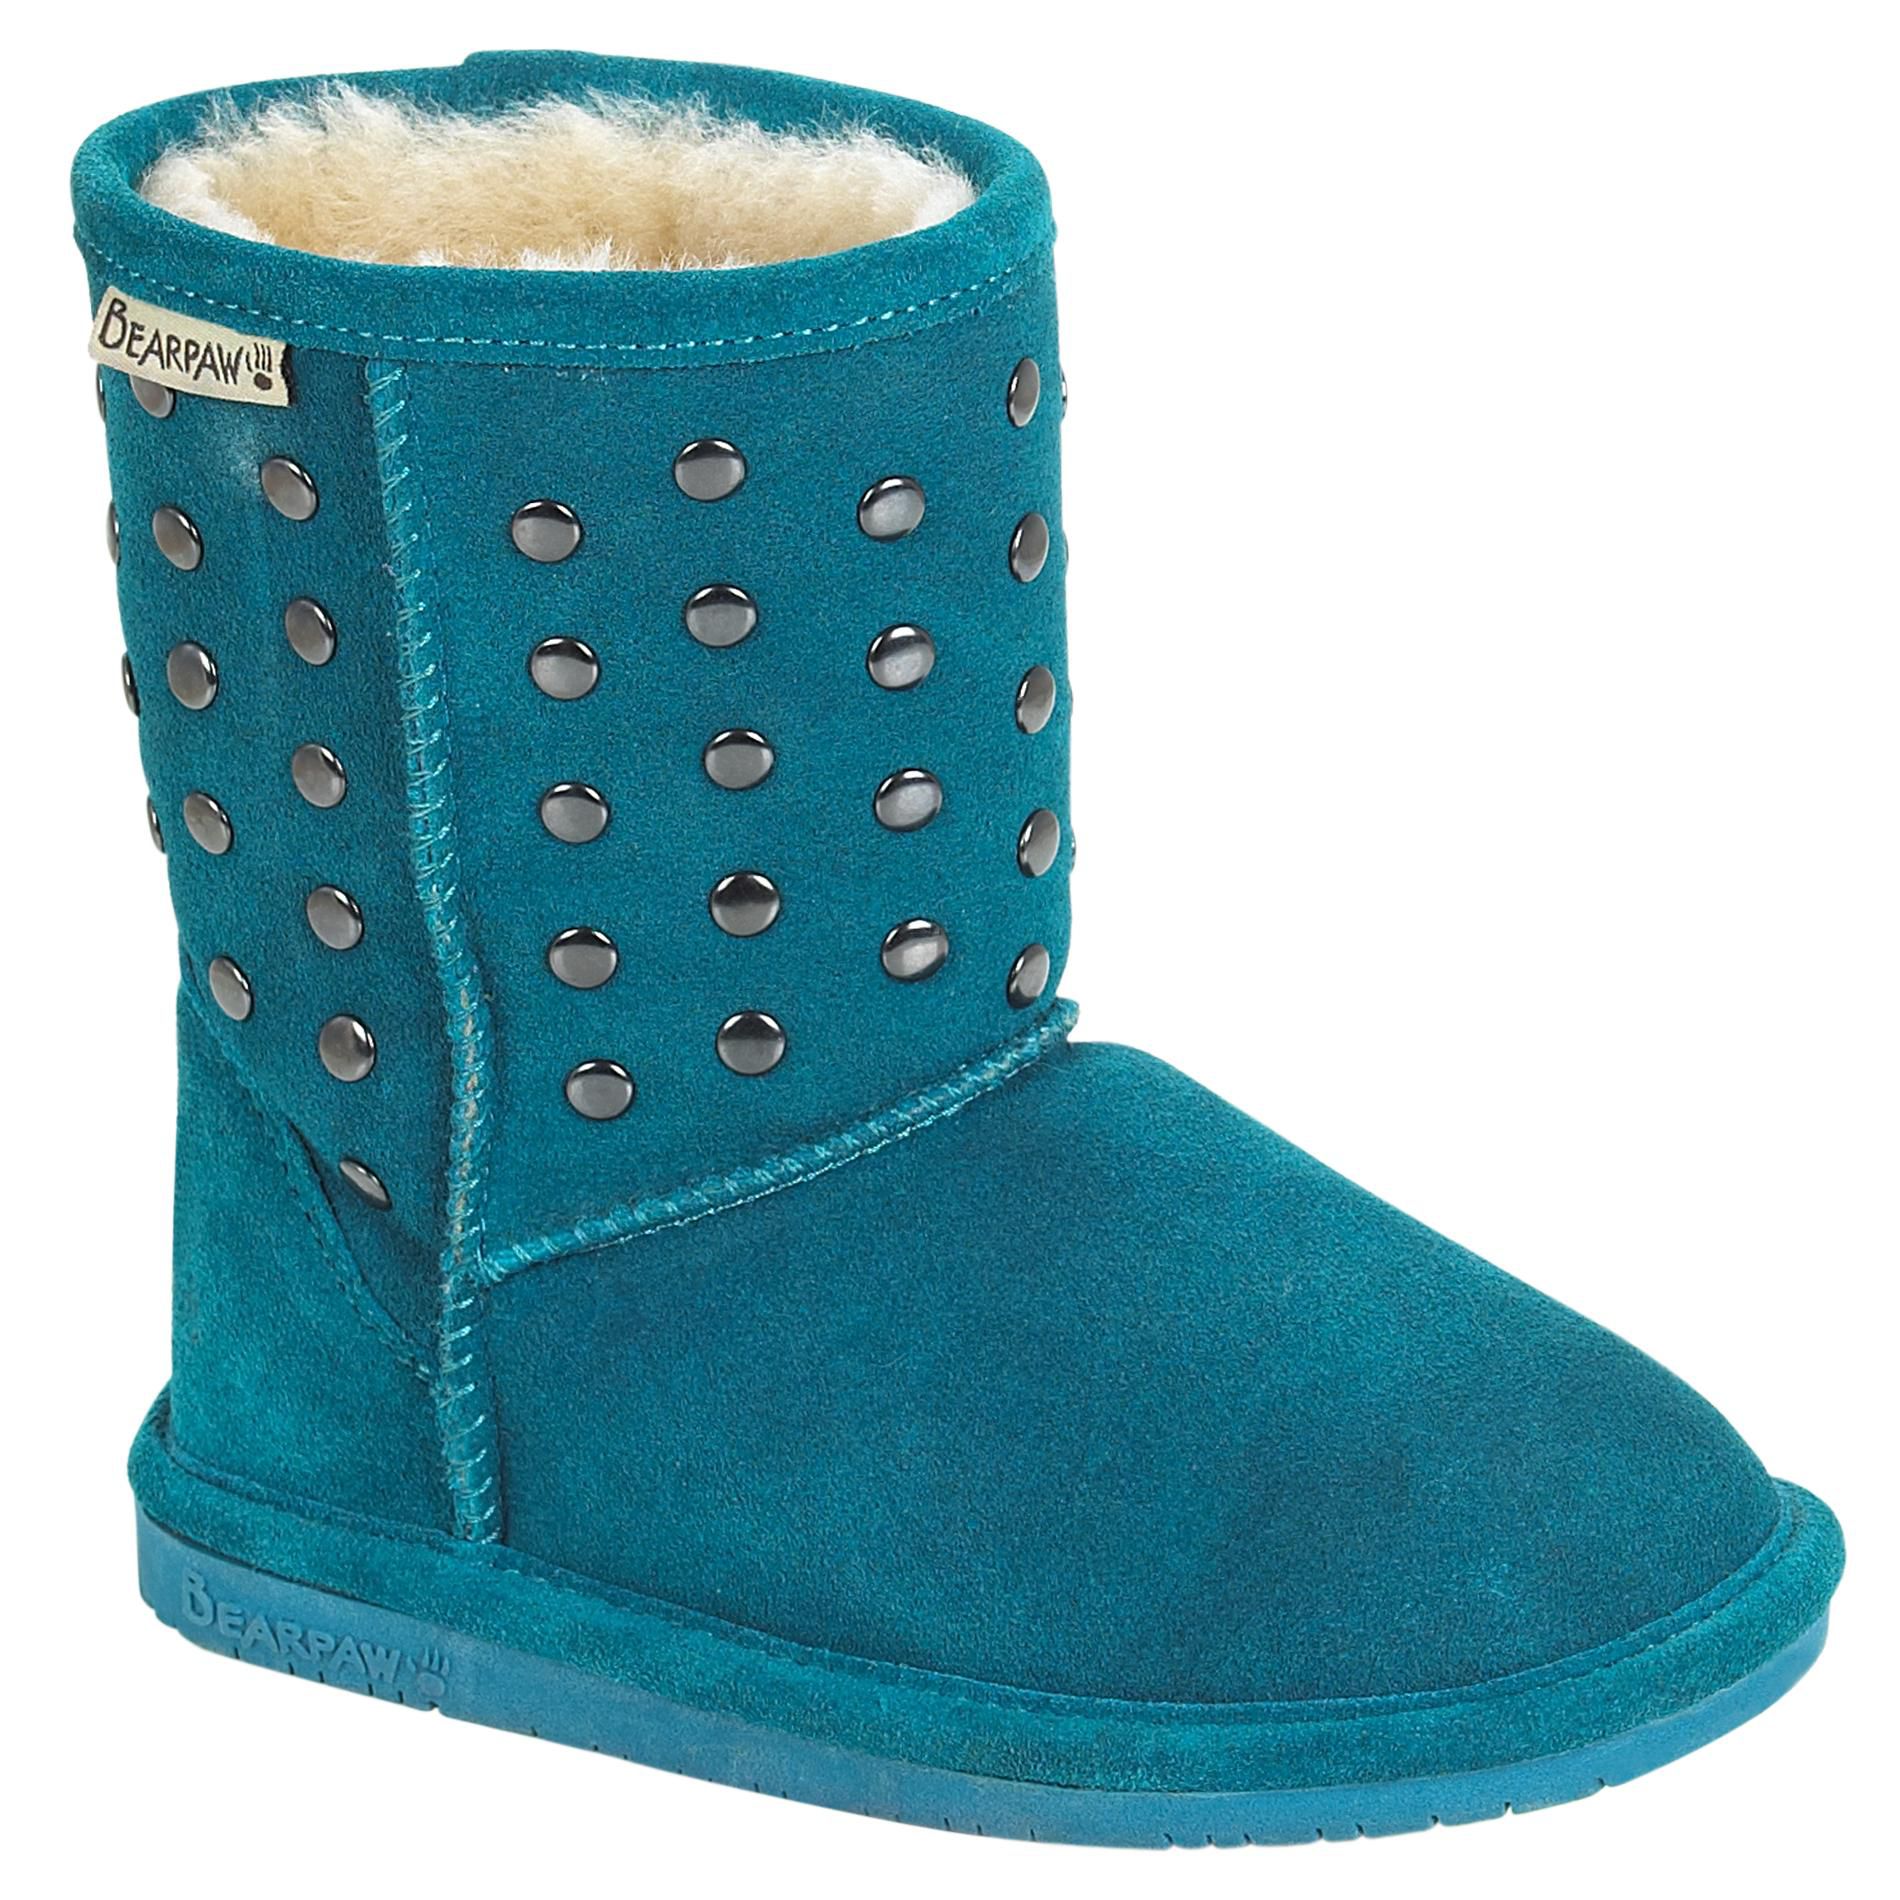 Bear Paw Girl's Gisele Fashion Boot - Teal